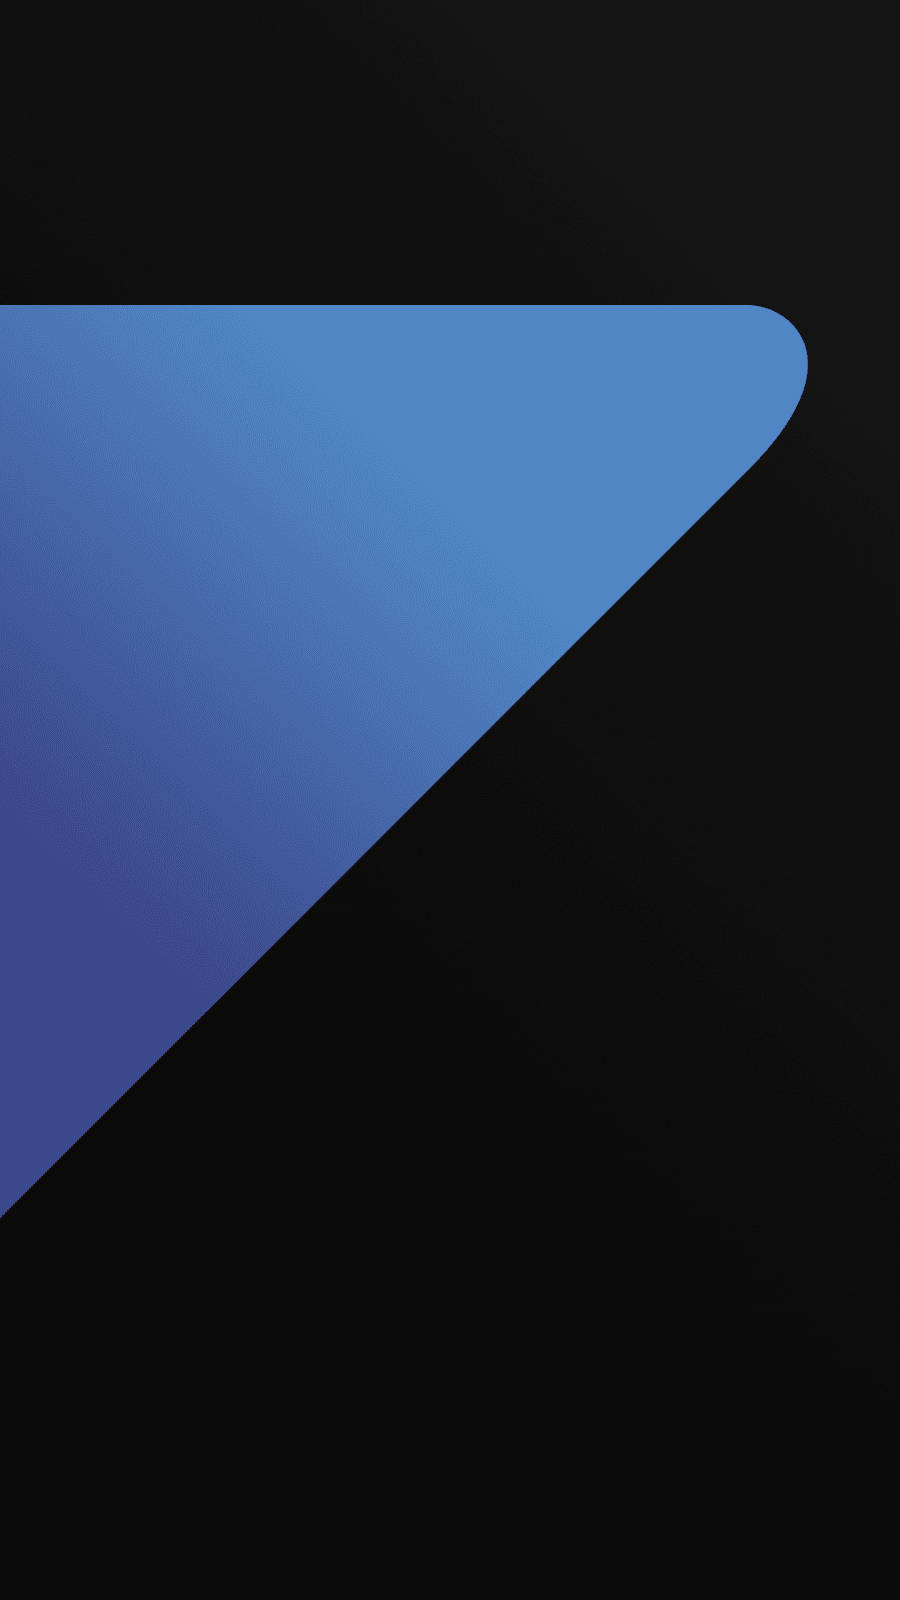 Samsung Galaxy S7 Edge Pale Blue And Black